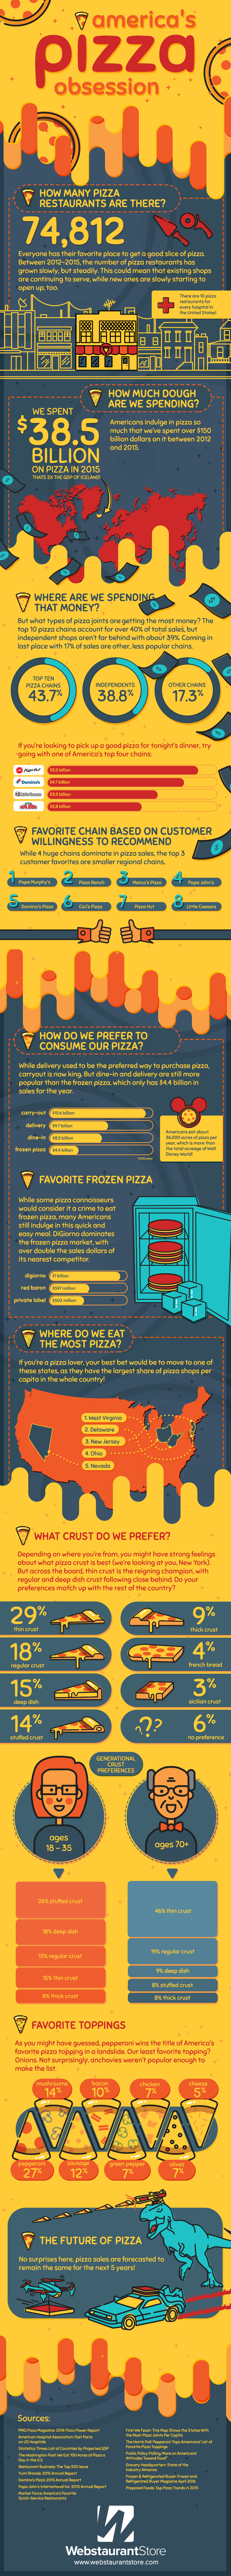 America's Pizza Obsession